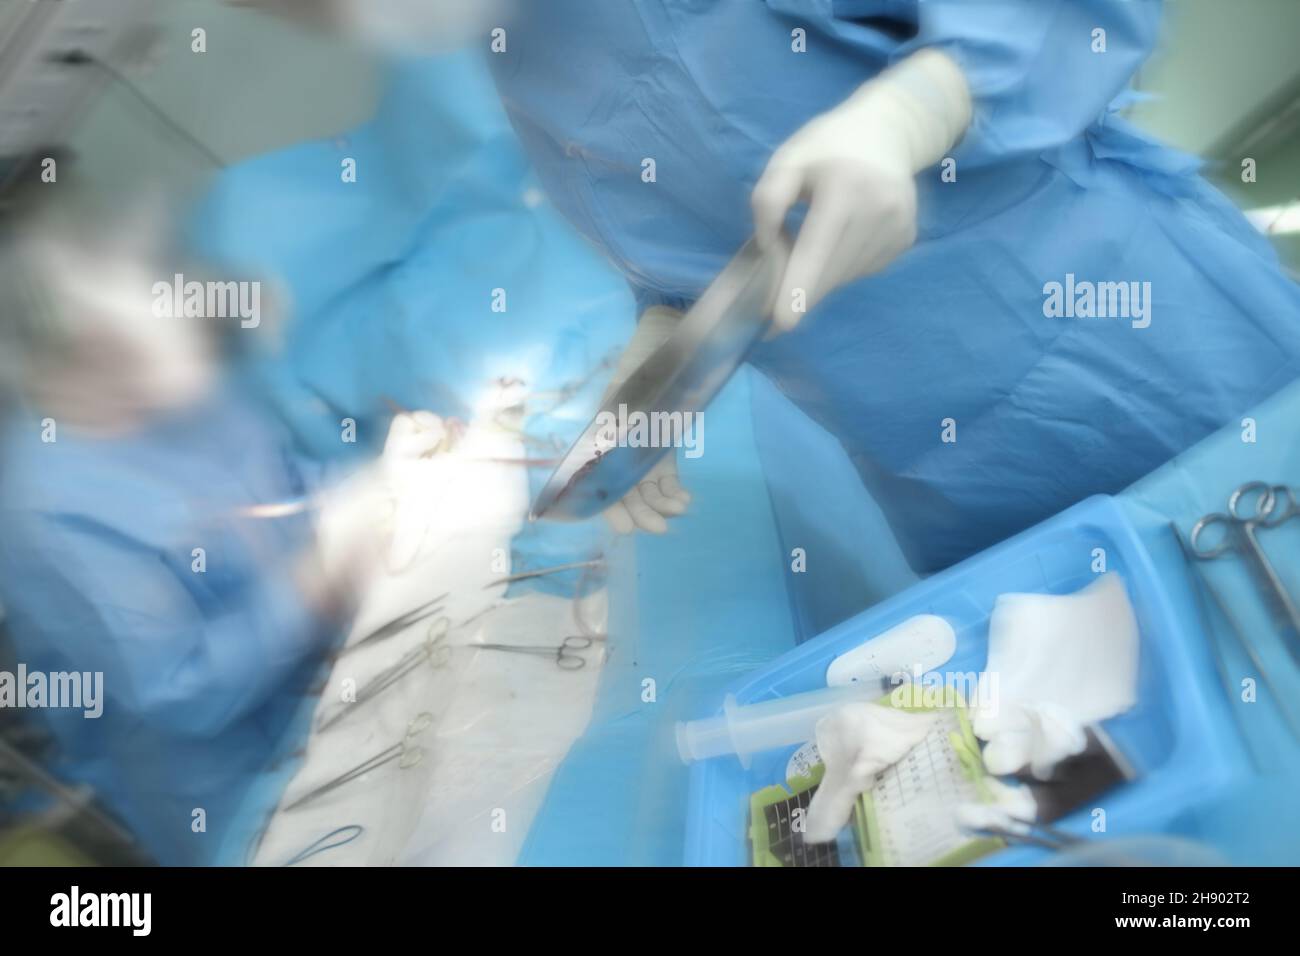 Working surgeons during emergency operating process, unfocused background. Stock Photo